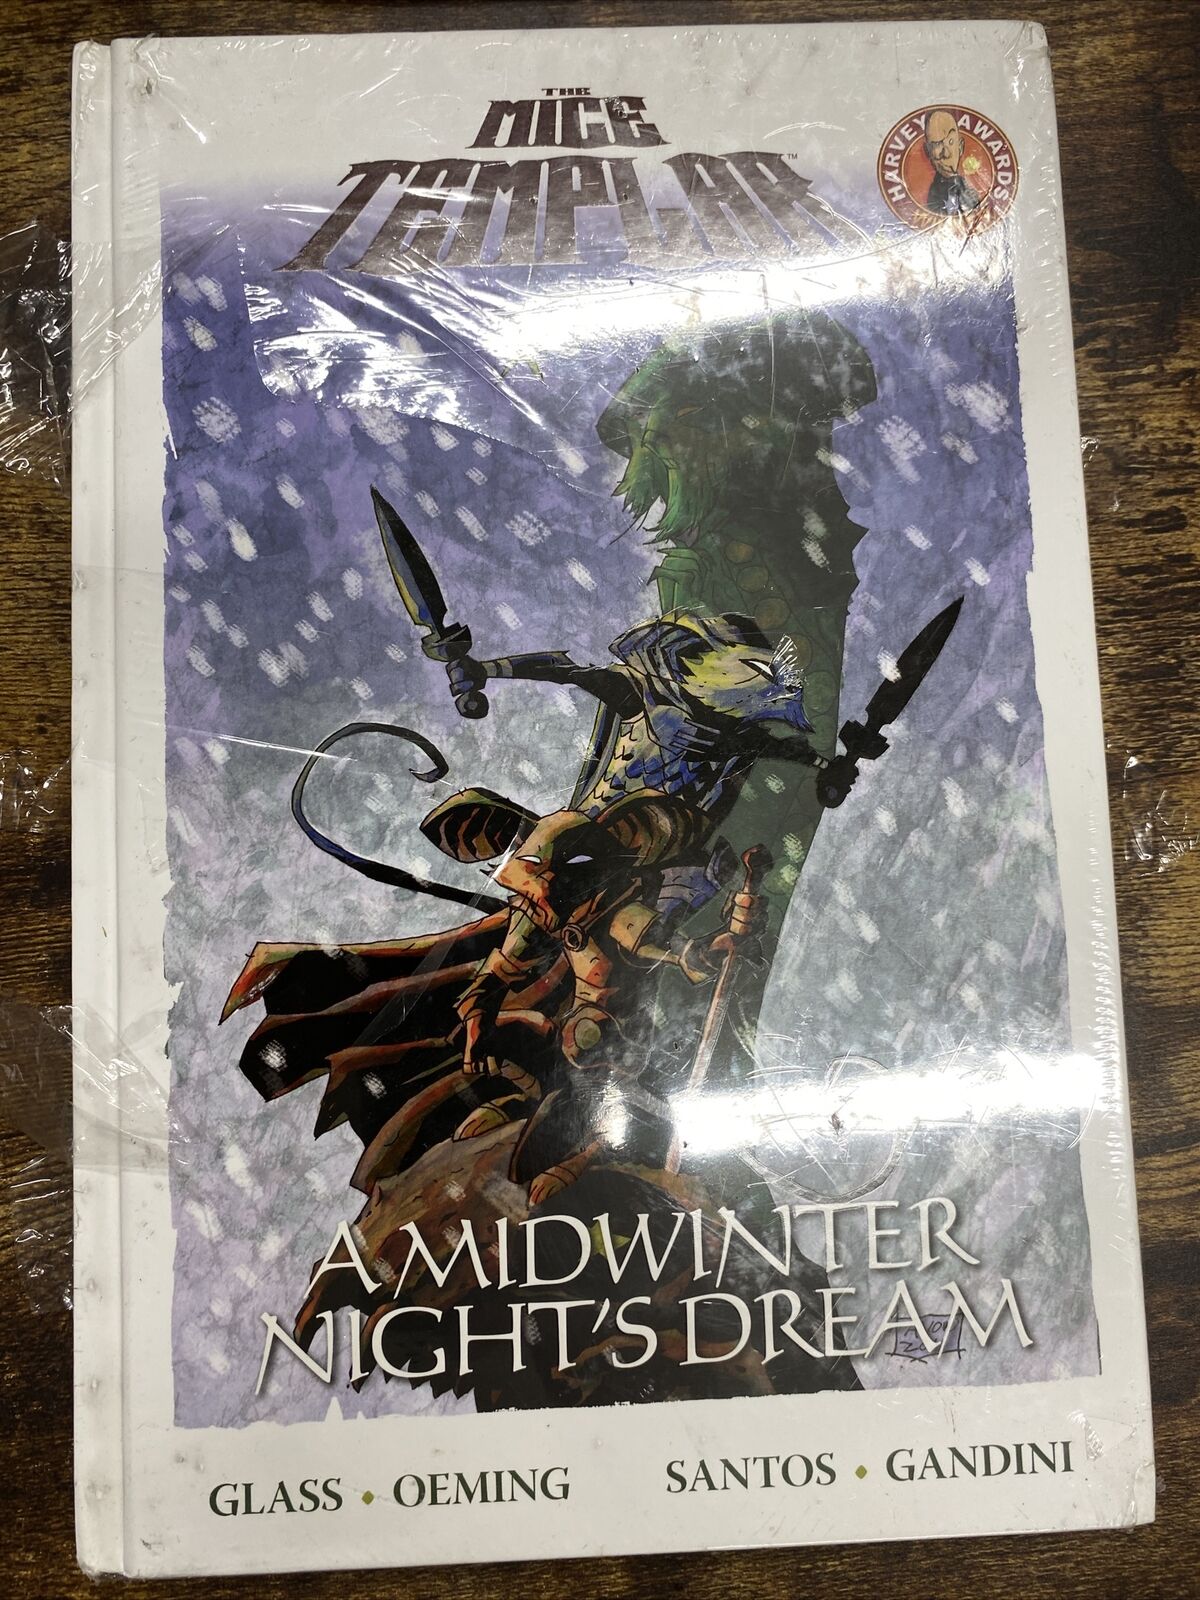 The Mice Templar A Midwinter Nights Dream Image Comics Hardcover